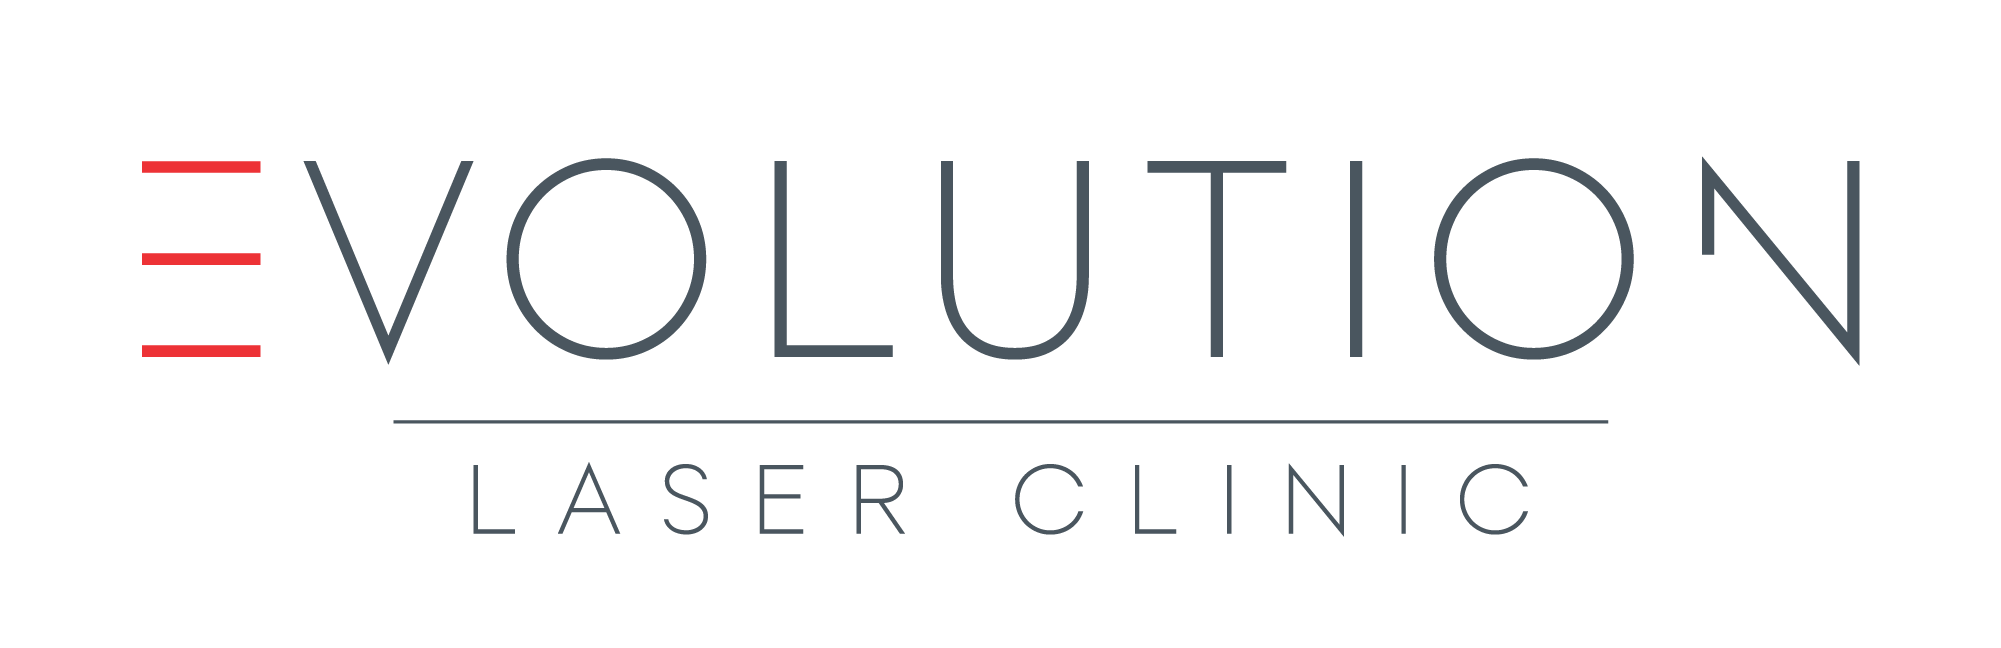 evolution laser clinic